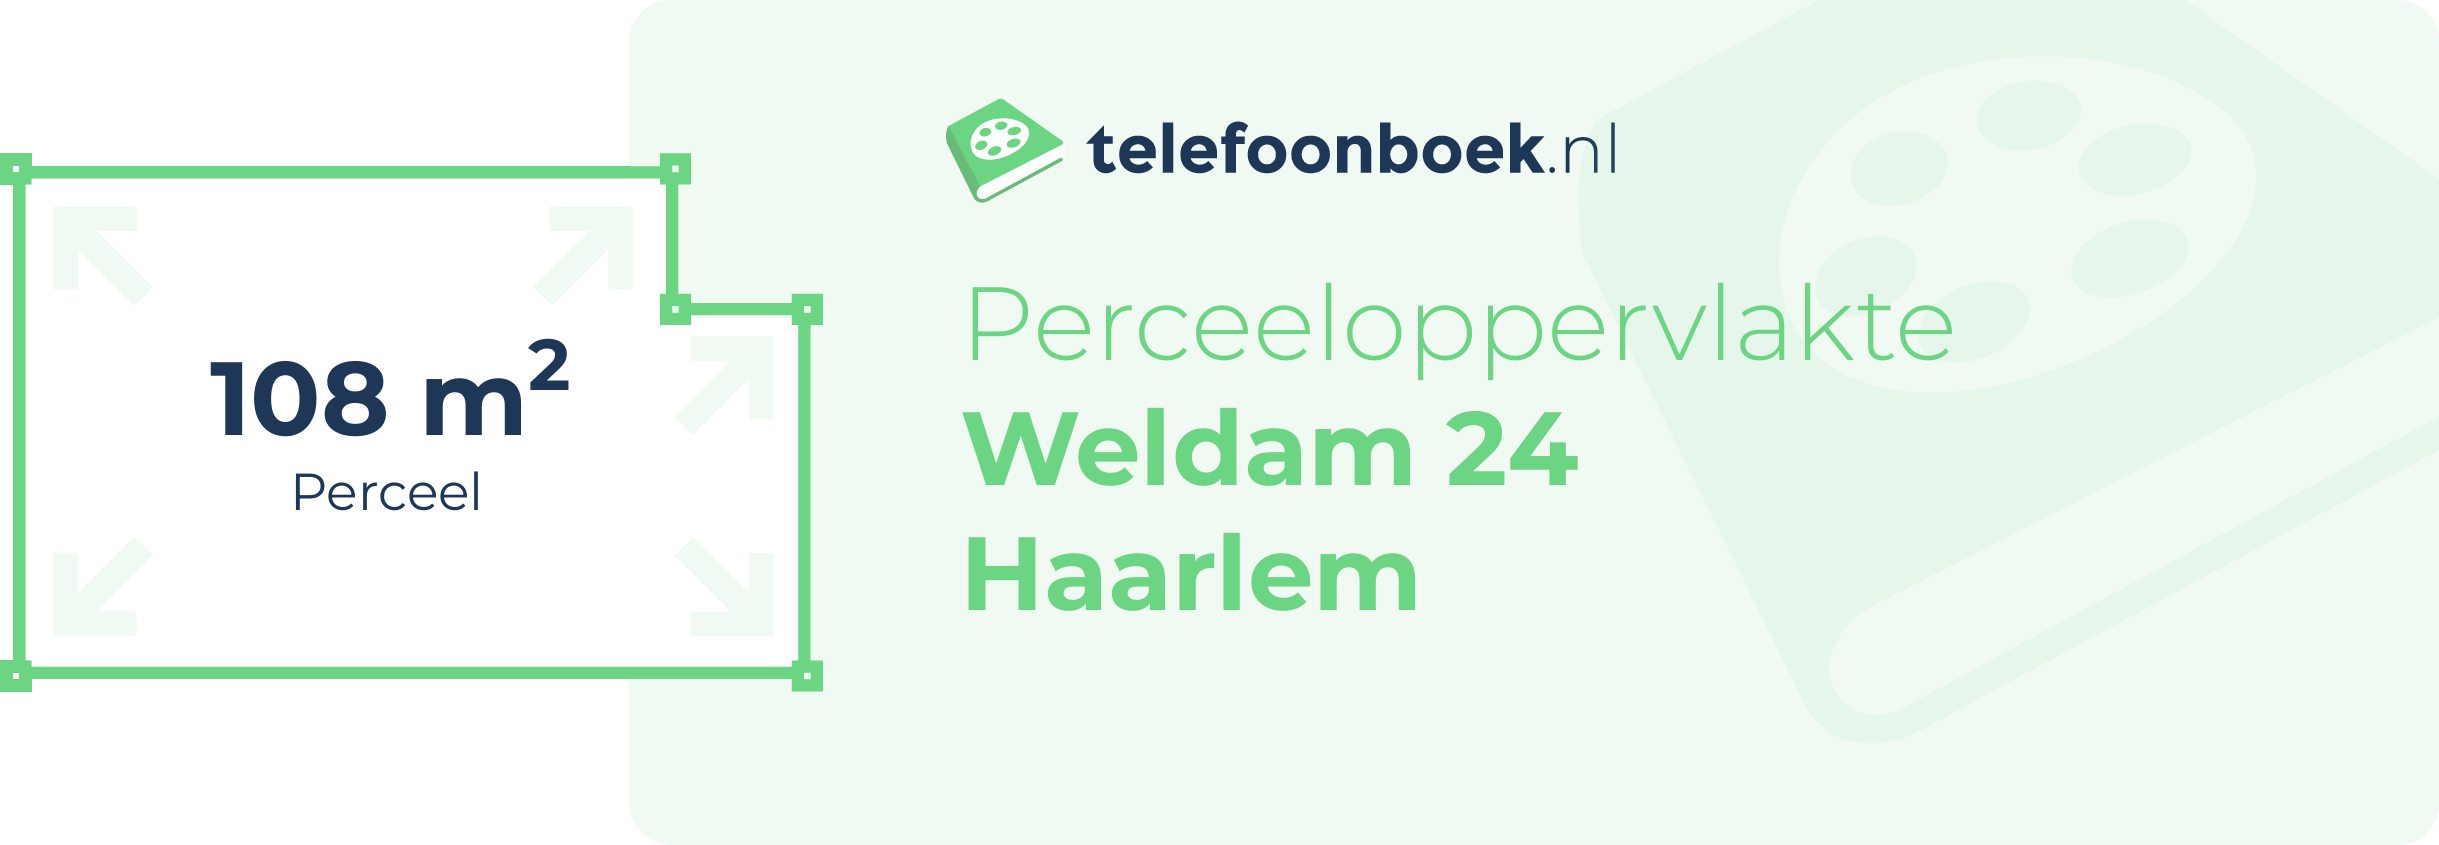 Perceeloppervlakte Weldam 24 Haarlem